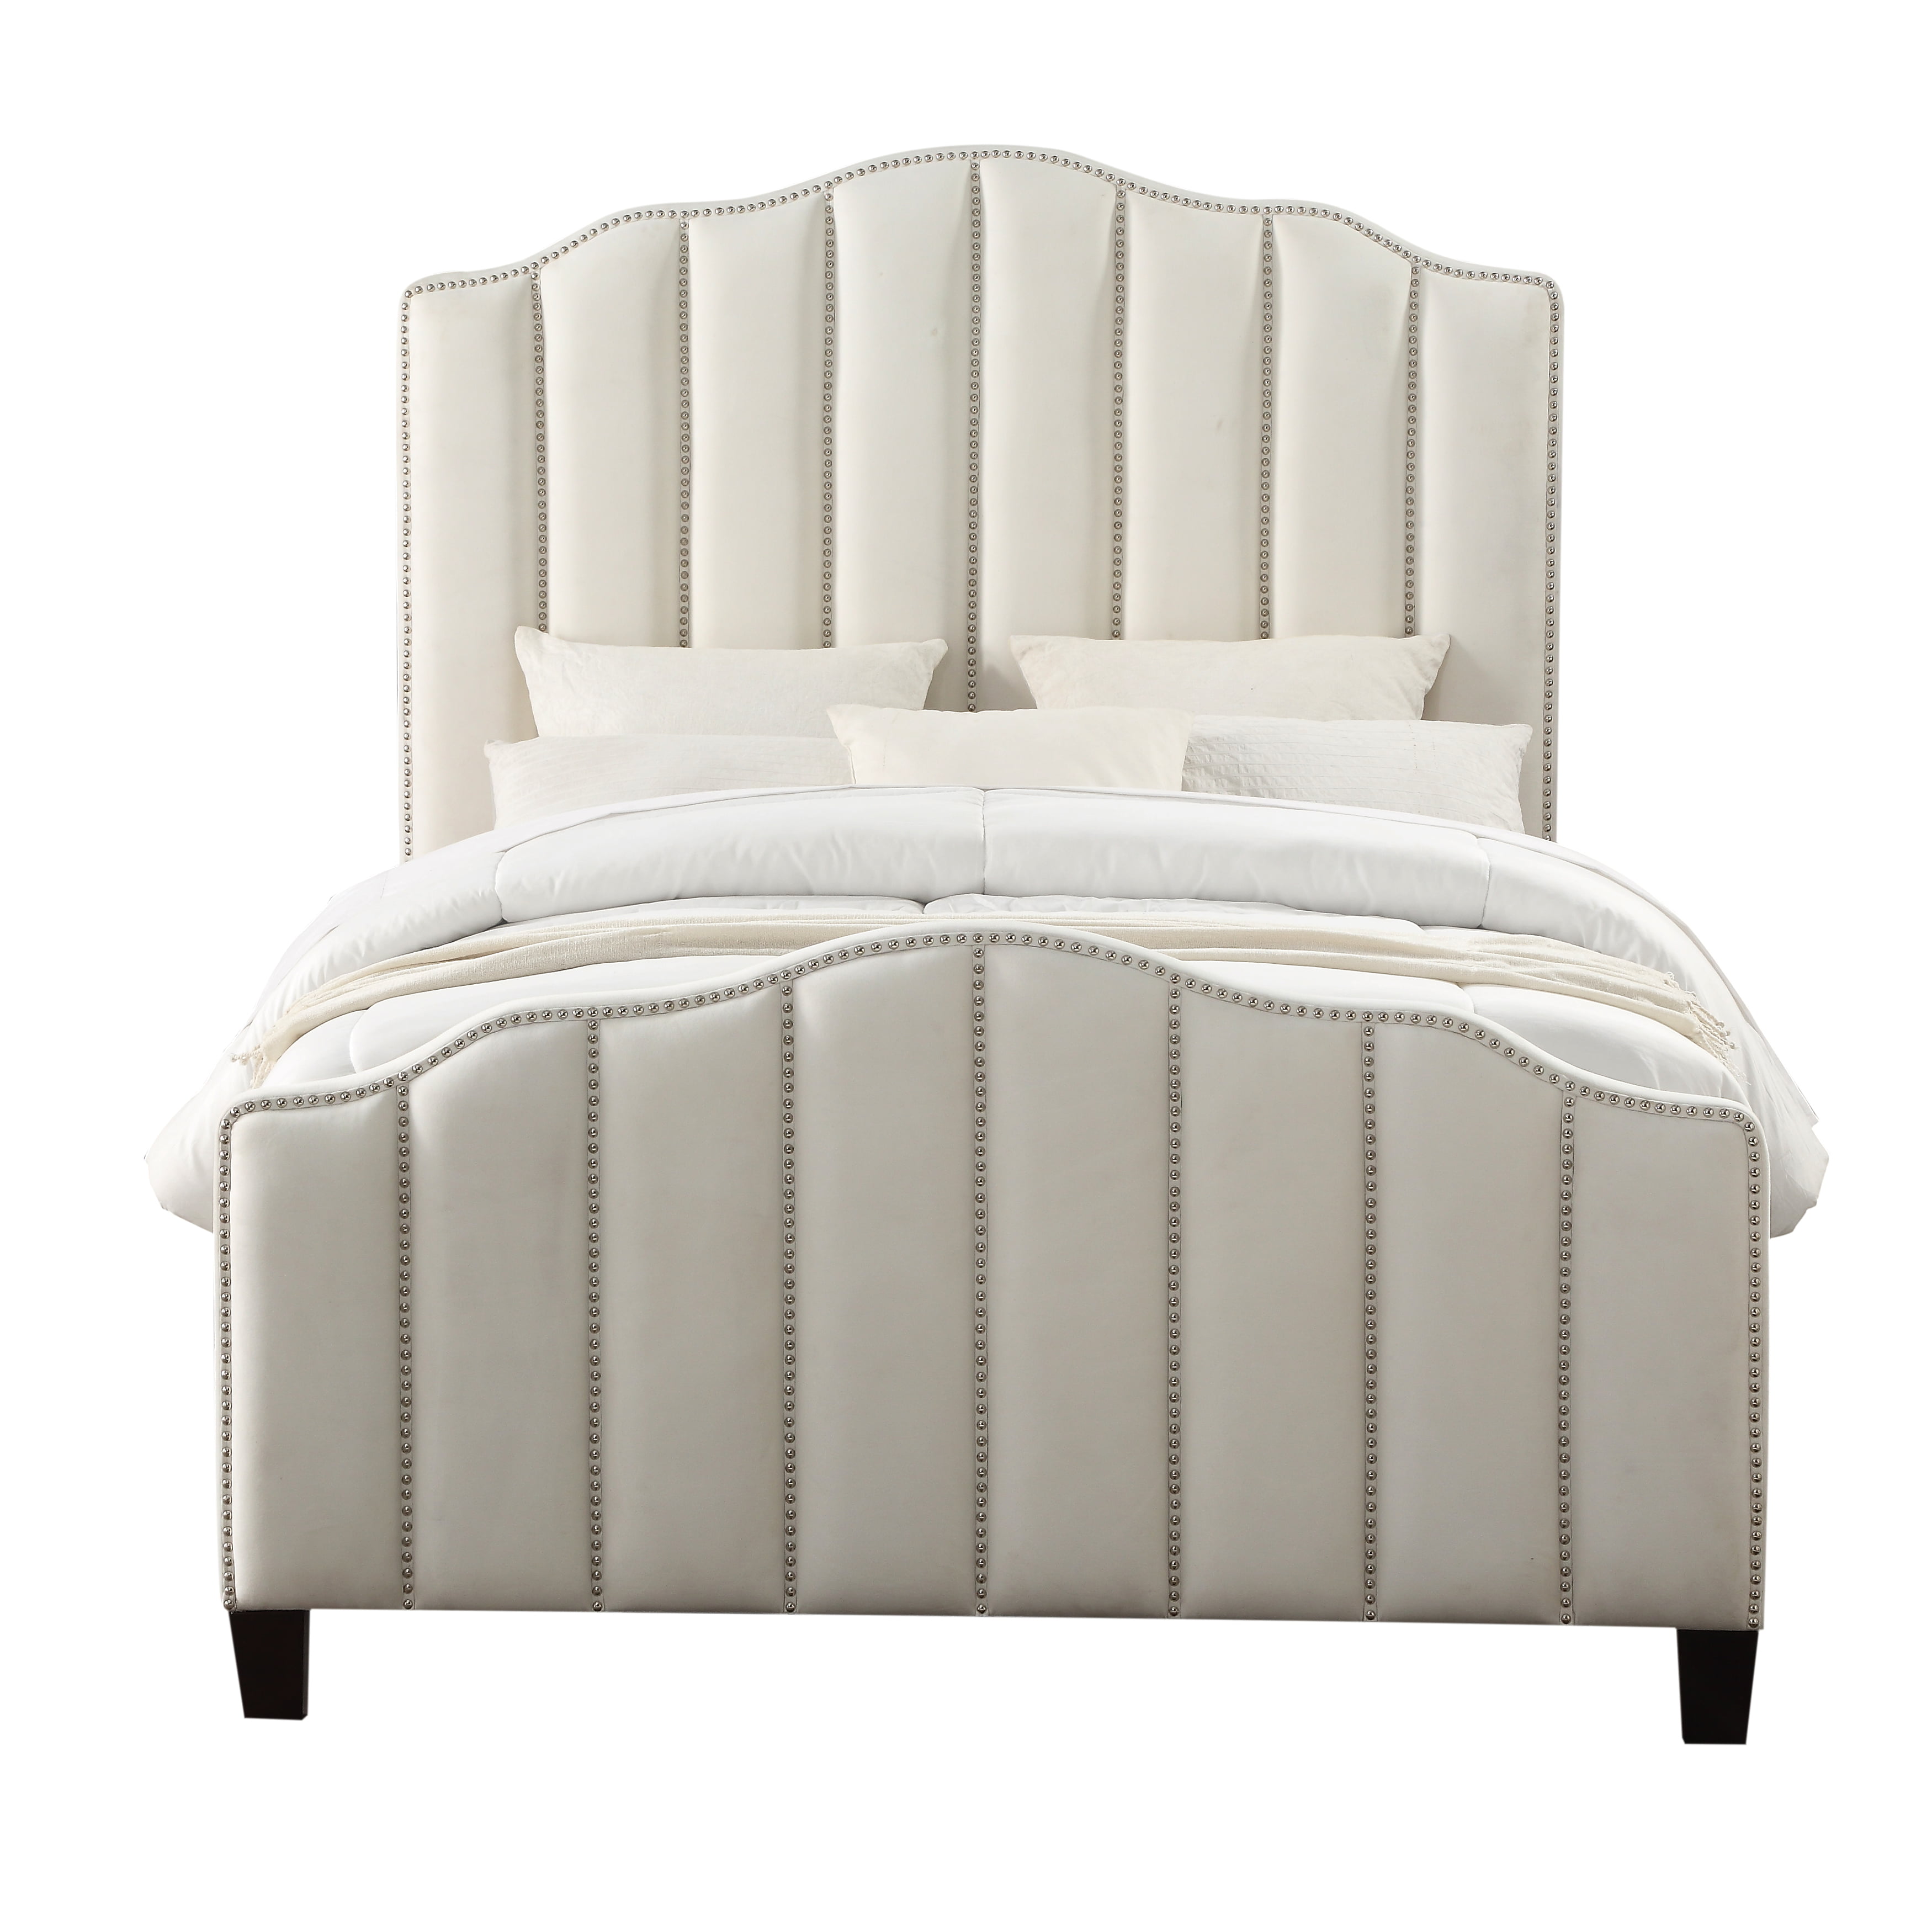 Homefare Glam Channeled Upholstered, Upholstered Bed Frame Queen Cream